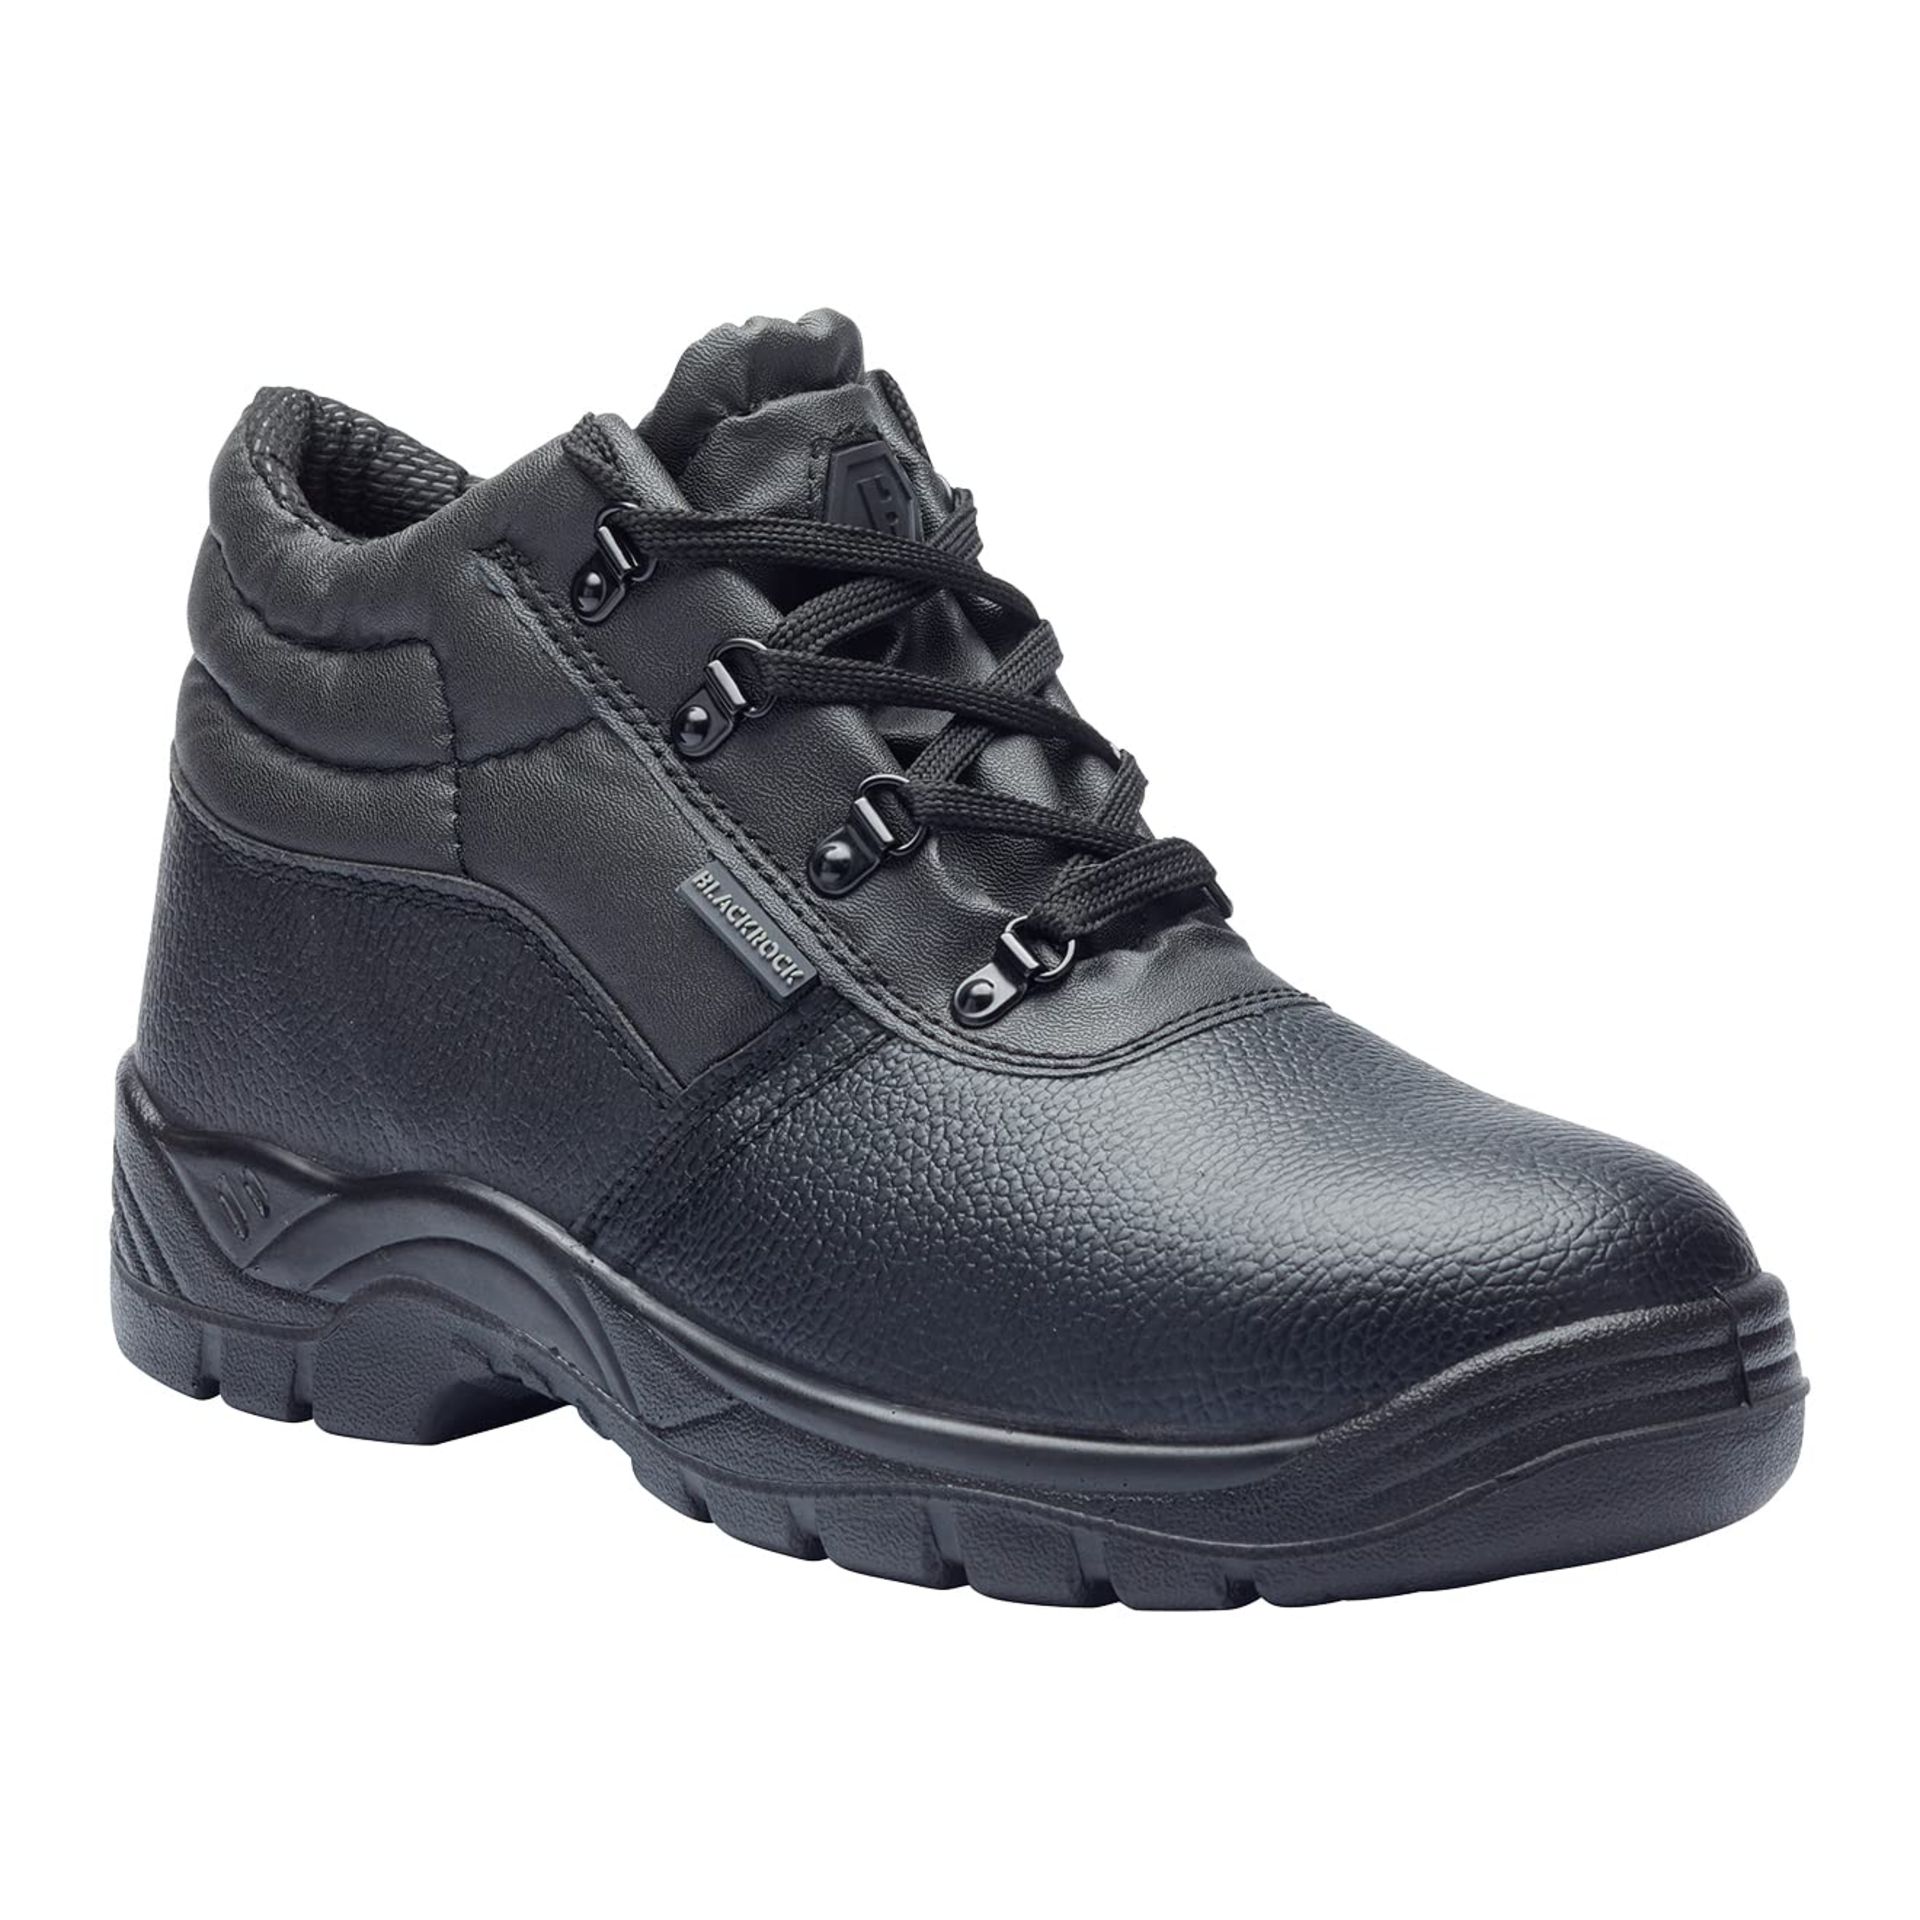 Blackrock SB-P SRC Safety Chukka Work Boots, Mens Womens Steel Toe Cap Black Leather, Walking Hiker